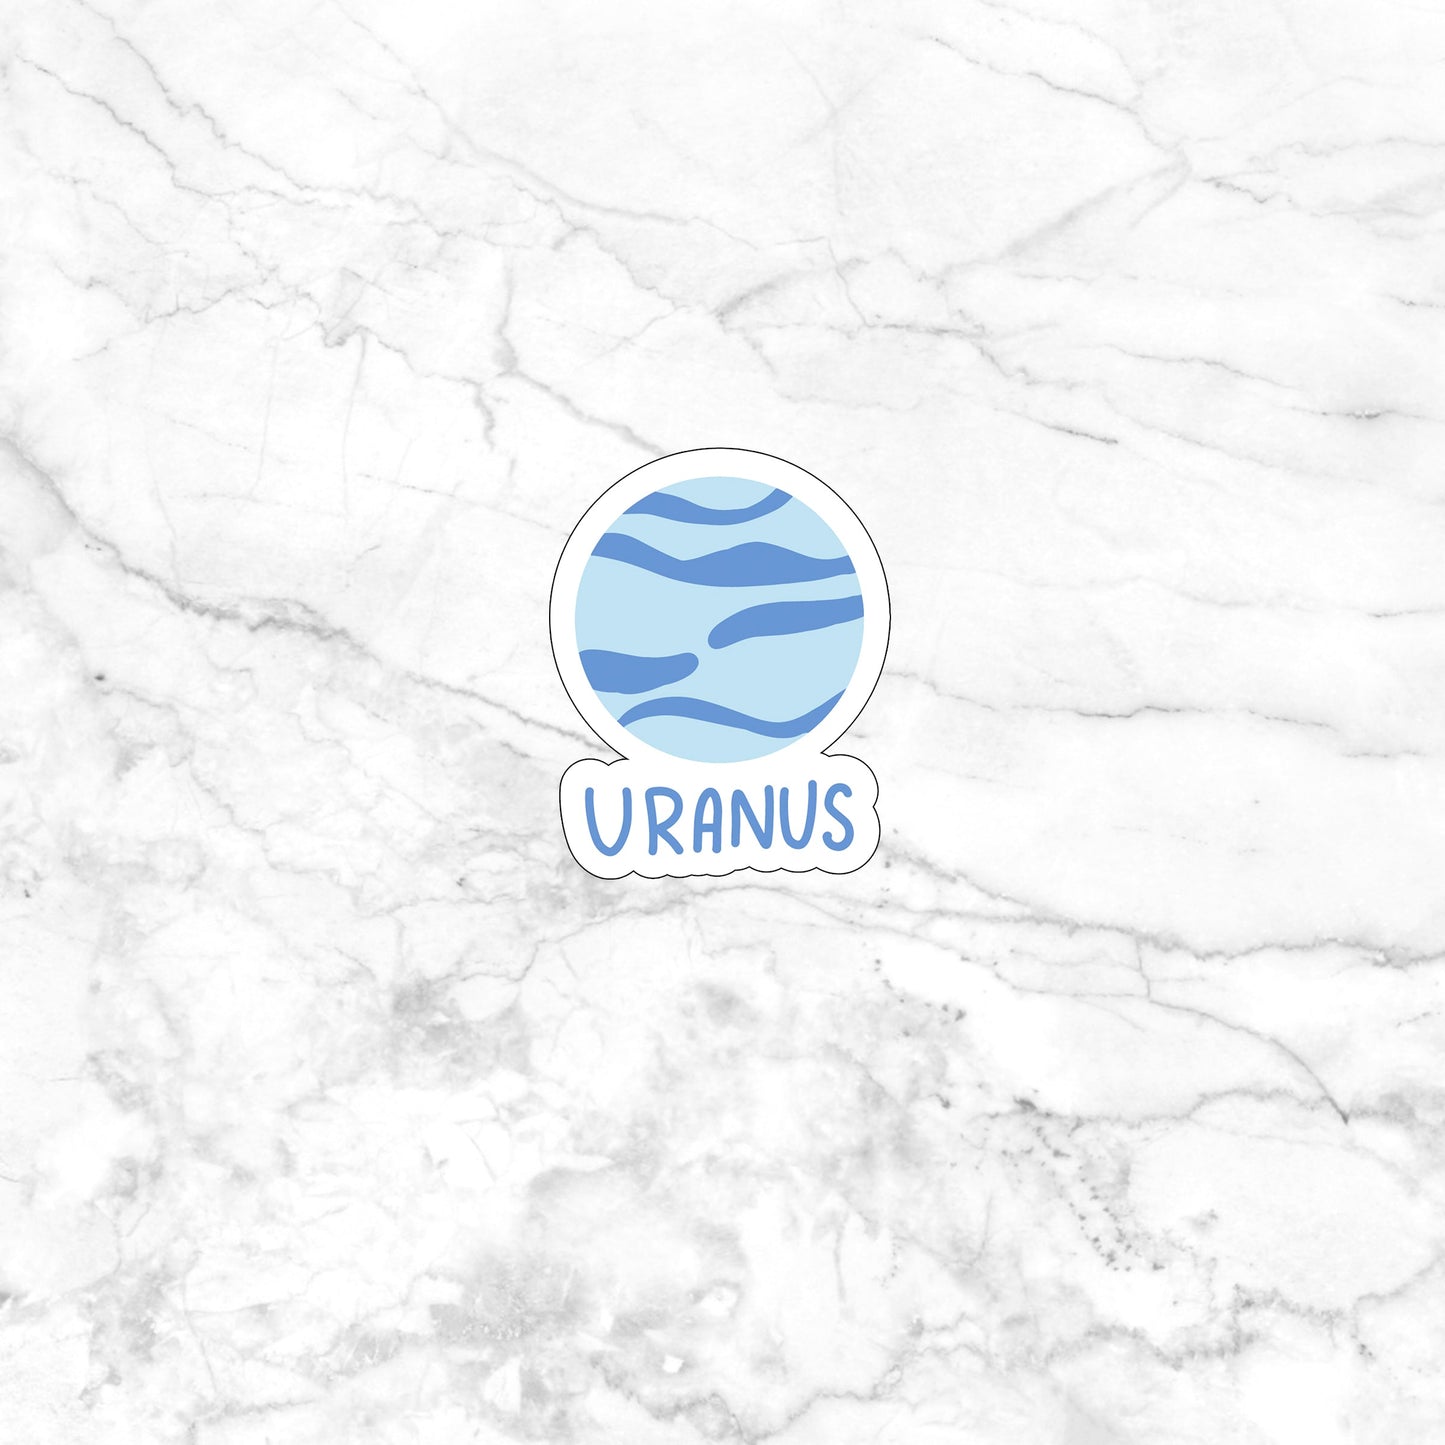 Planet stickers () Stickers, Uranus